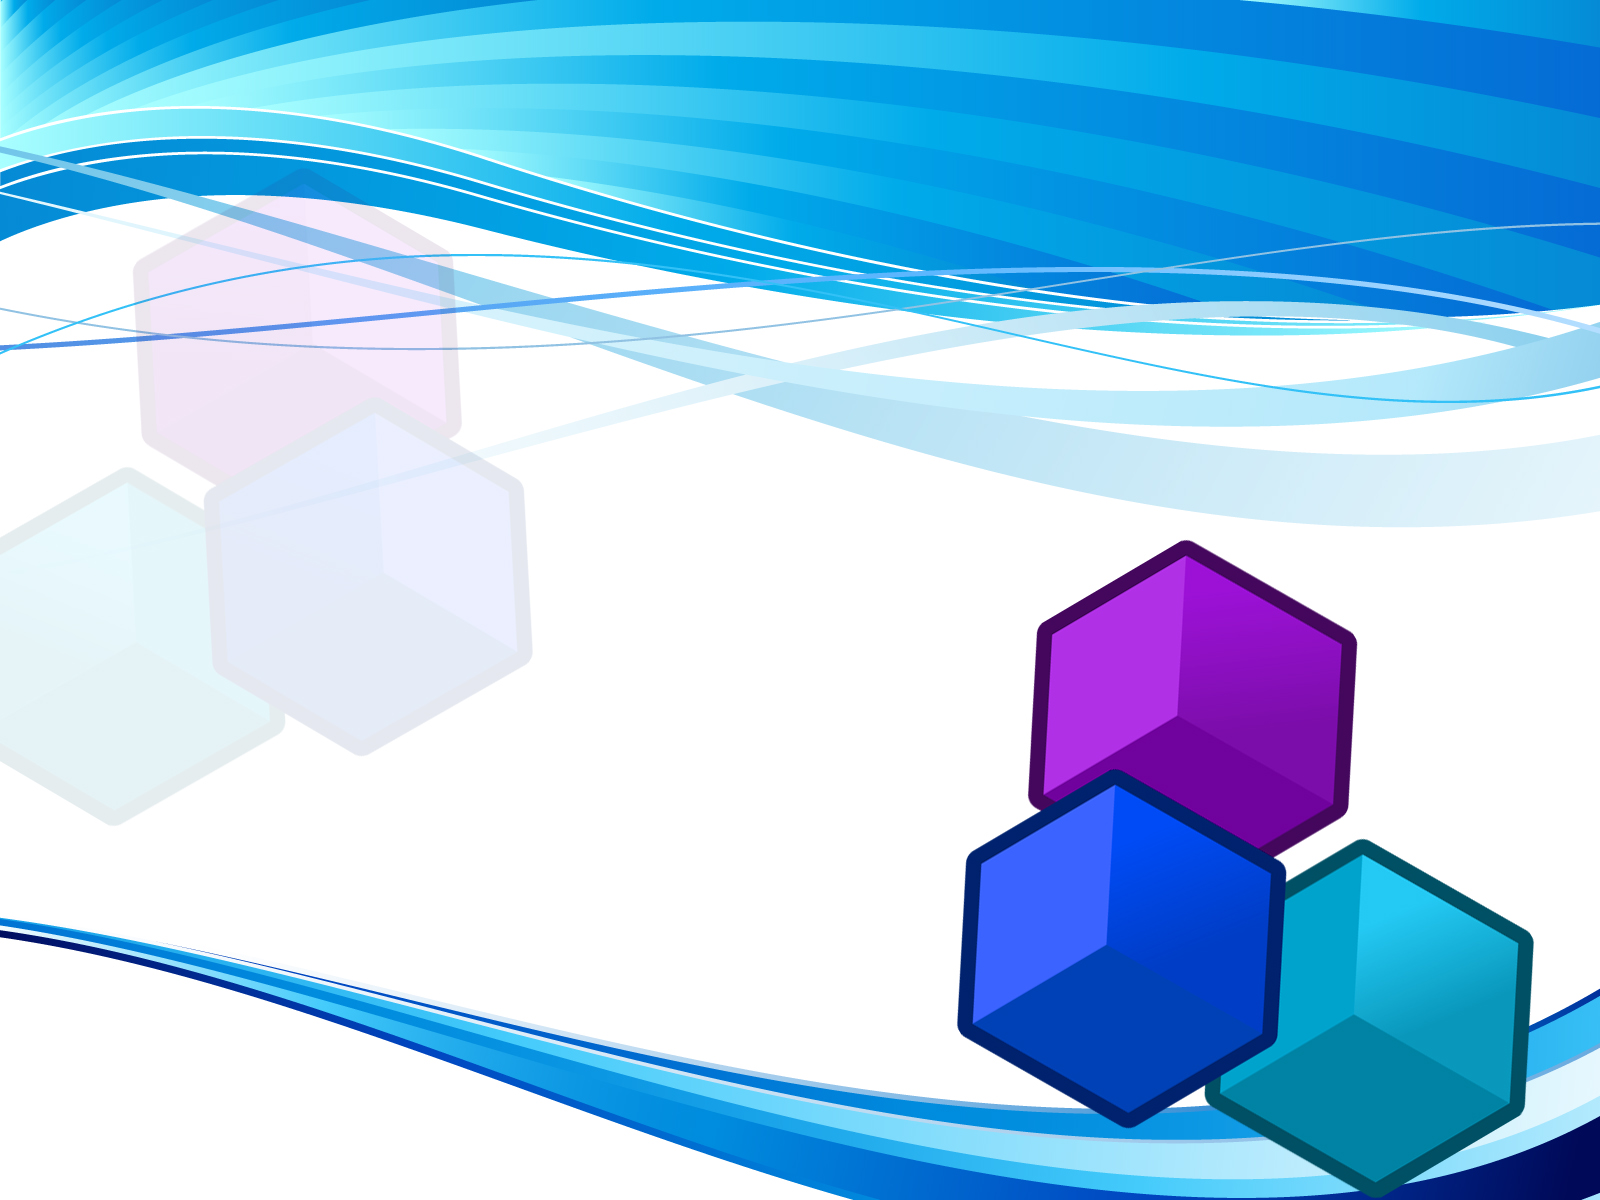  Blue  Cube Backgrounds 3D Blue  Templates  Free PPT  